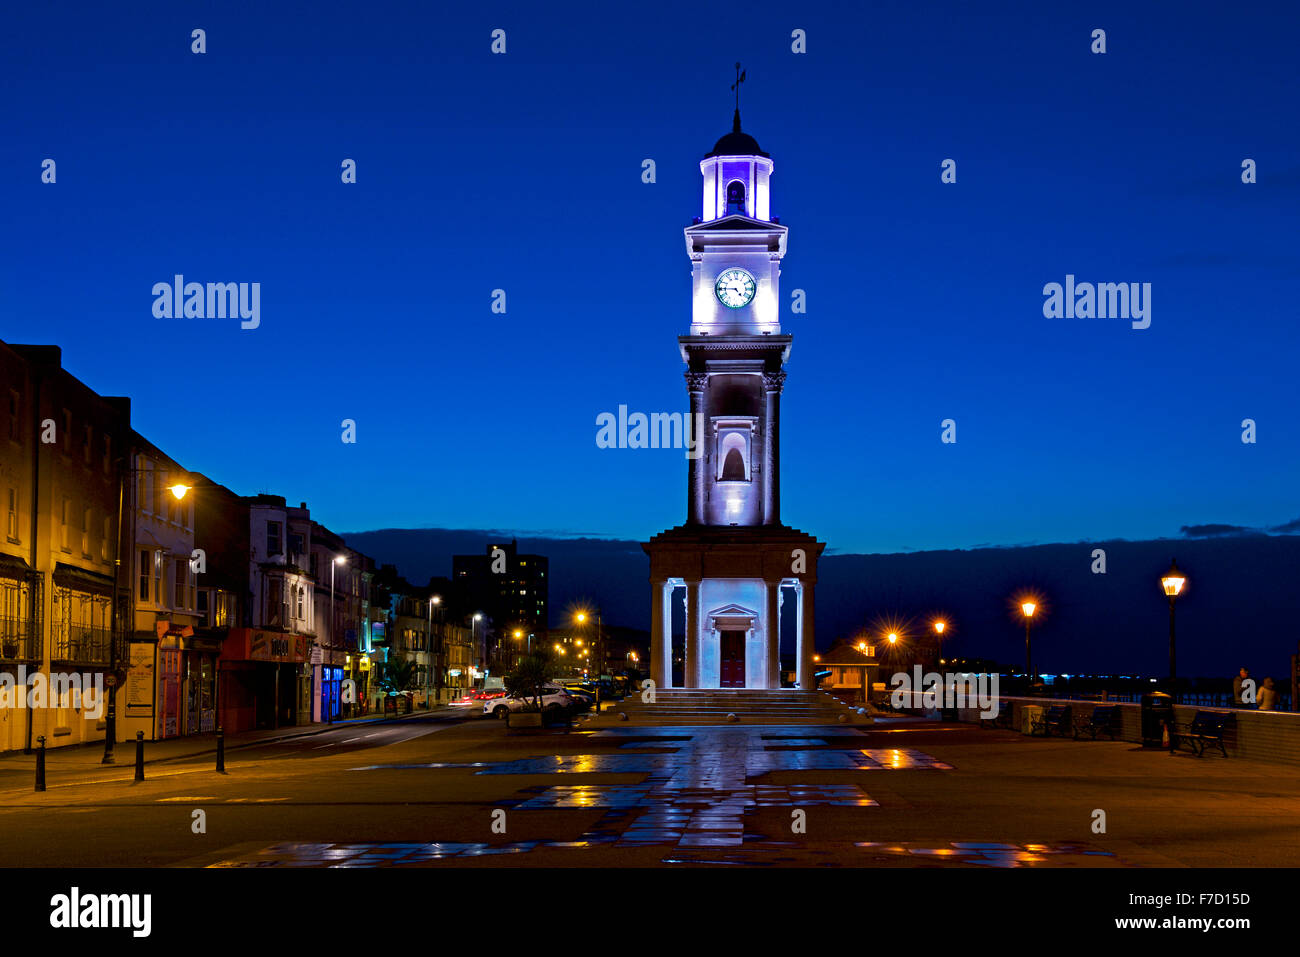 The clock tower, Herne Bay, at night, Kent, England UK Stock Photo